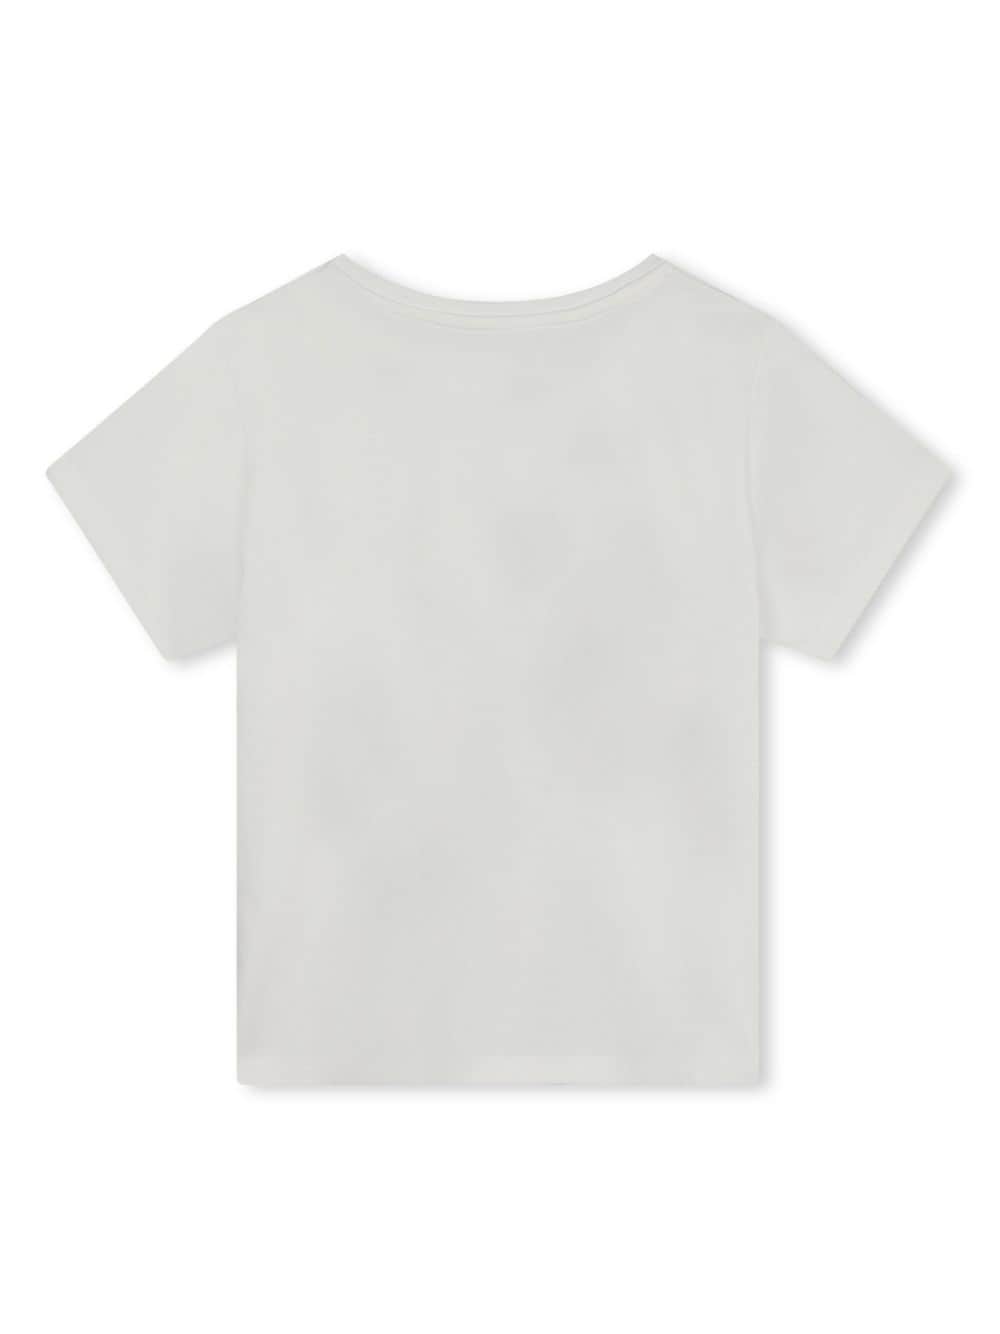 T-shirt bianca per bambina con logo oro